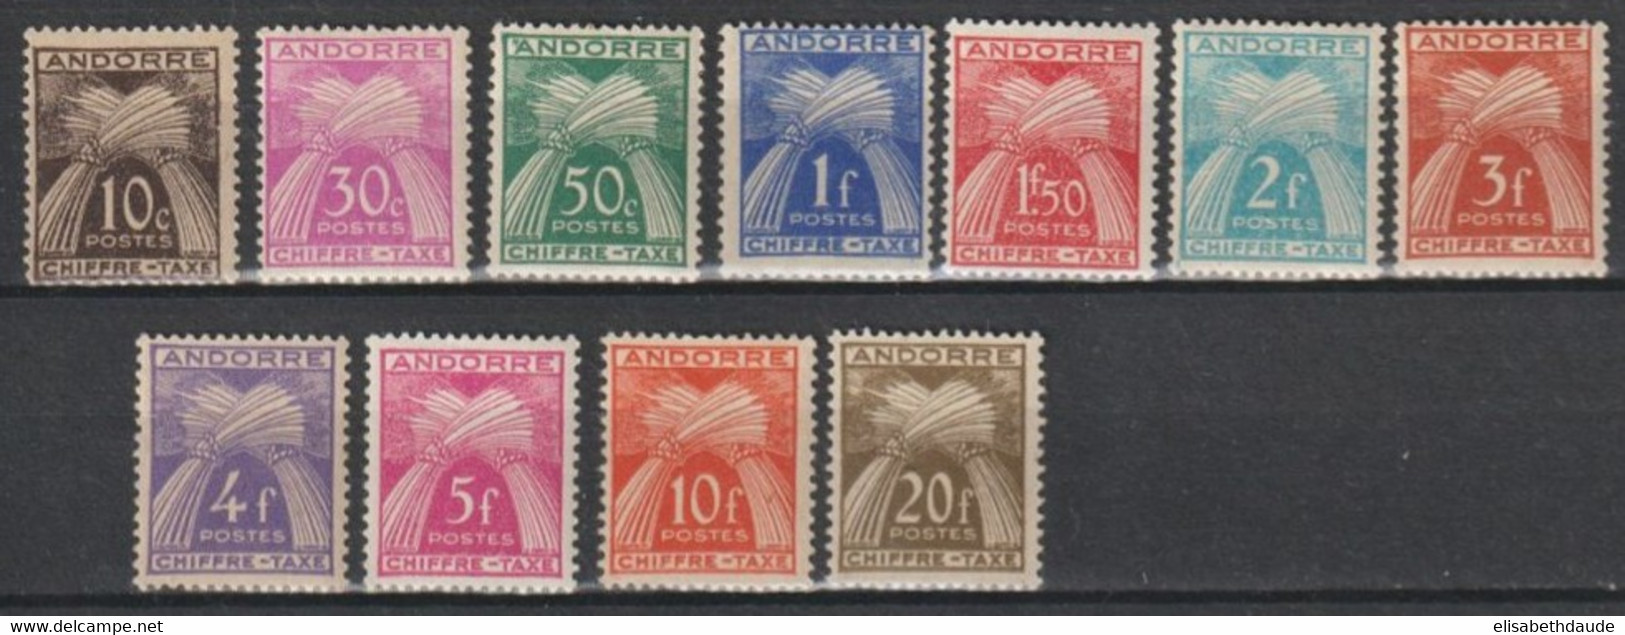 ANDORRE - TAXE - 1943 - SERIE COMPLETE GERBES - YVERT N°21/31 * MLH - COTE 2017 = 25 EUR. - - Unused Stamps